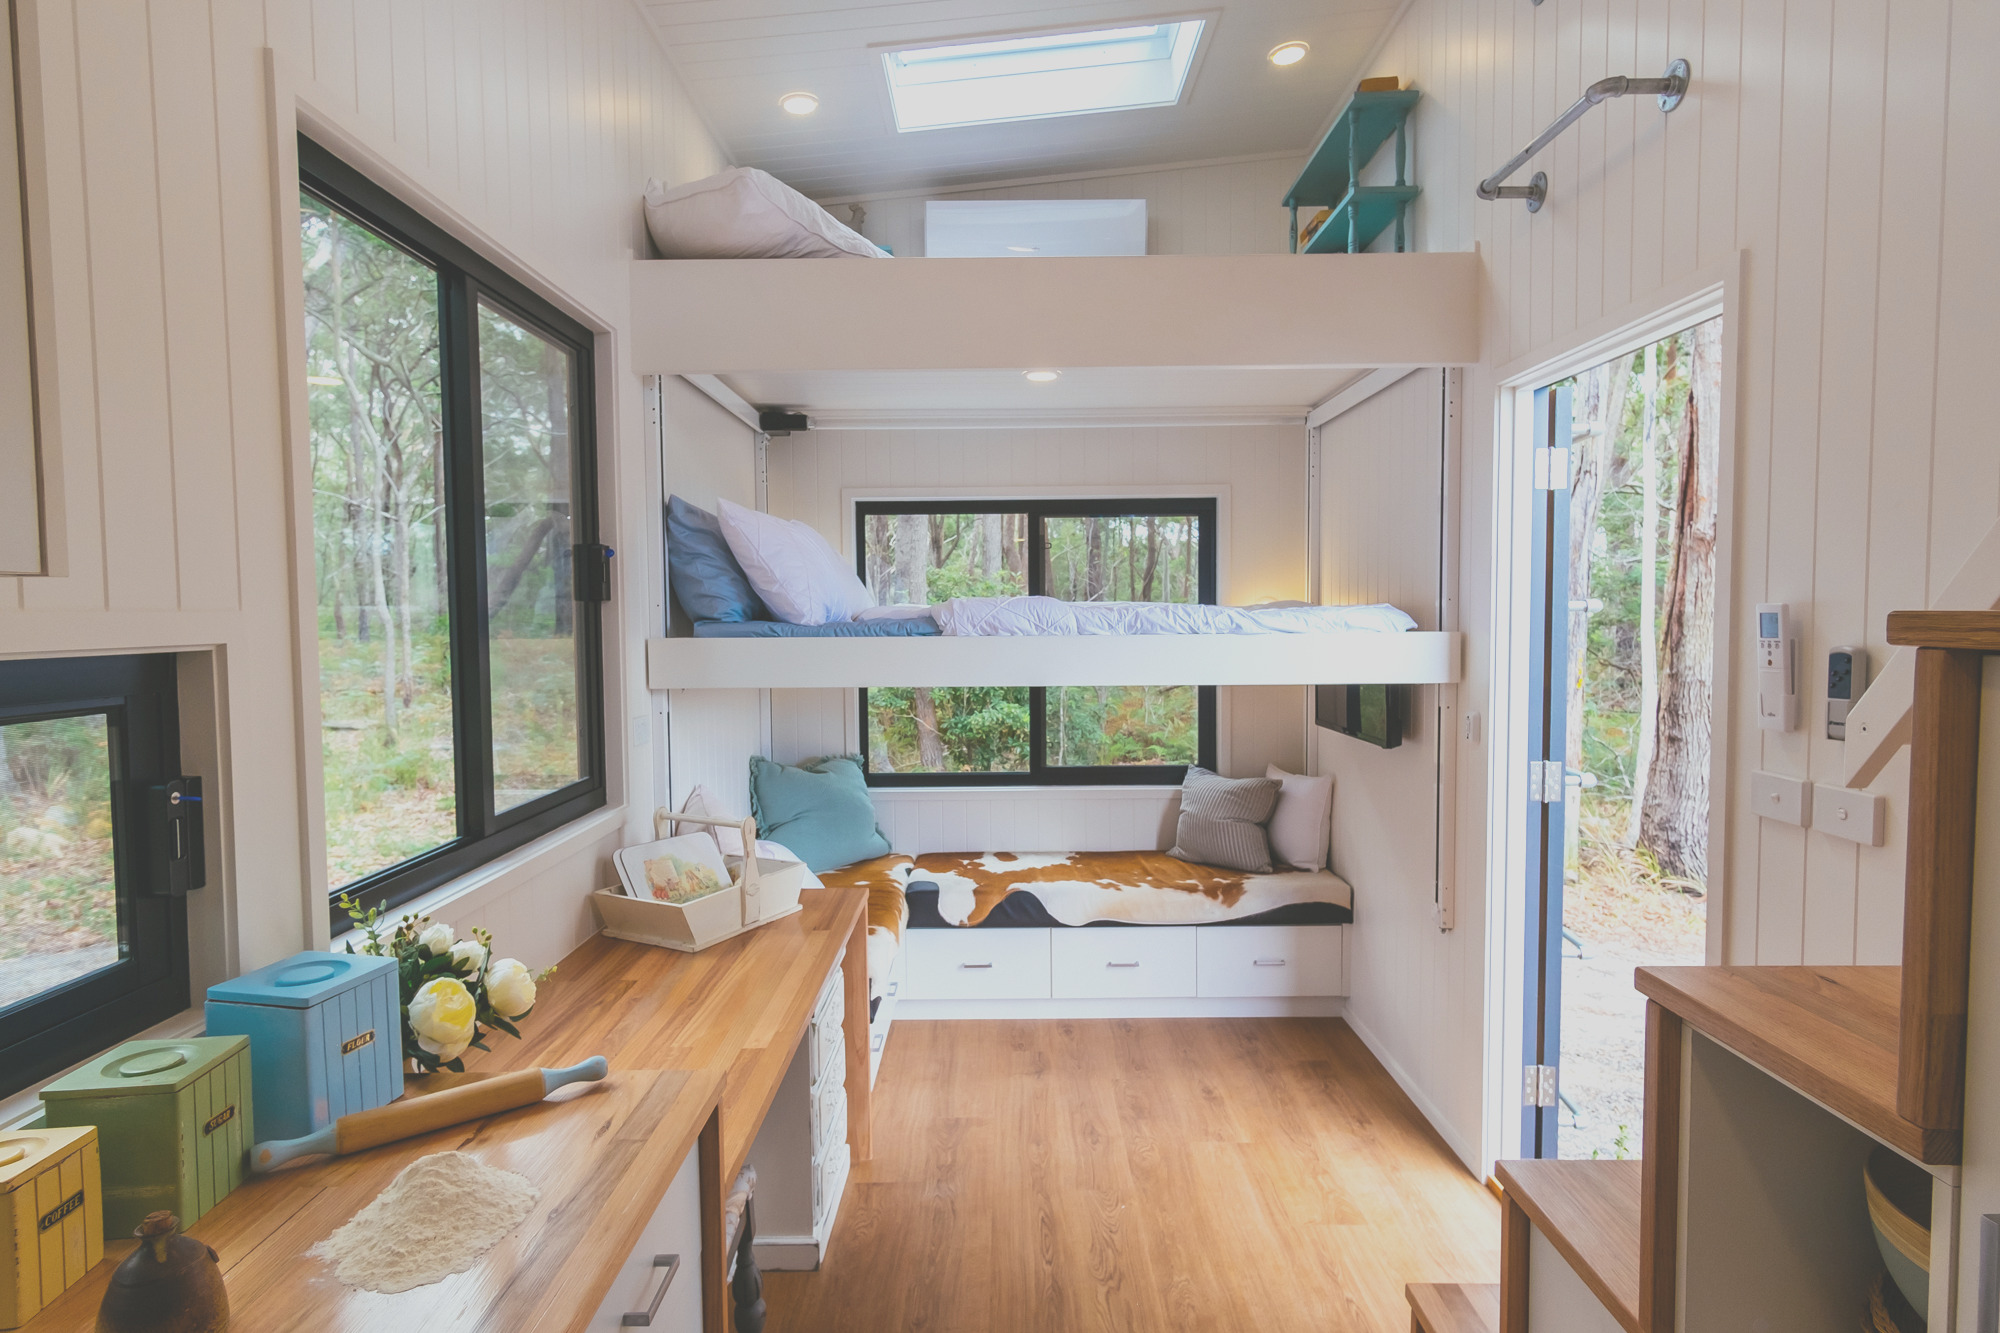 32 Amazing Tiny House Interior Design In 2019 - Home Decor Ideas